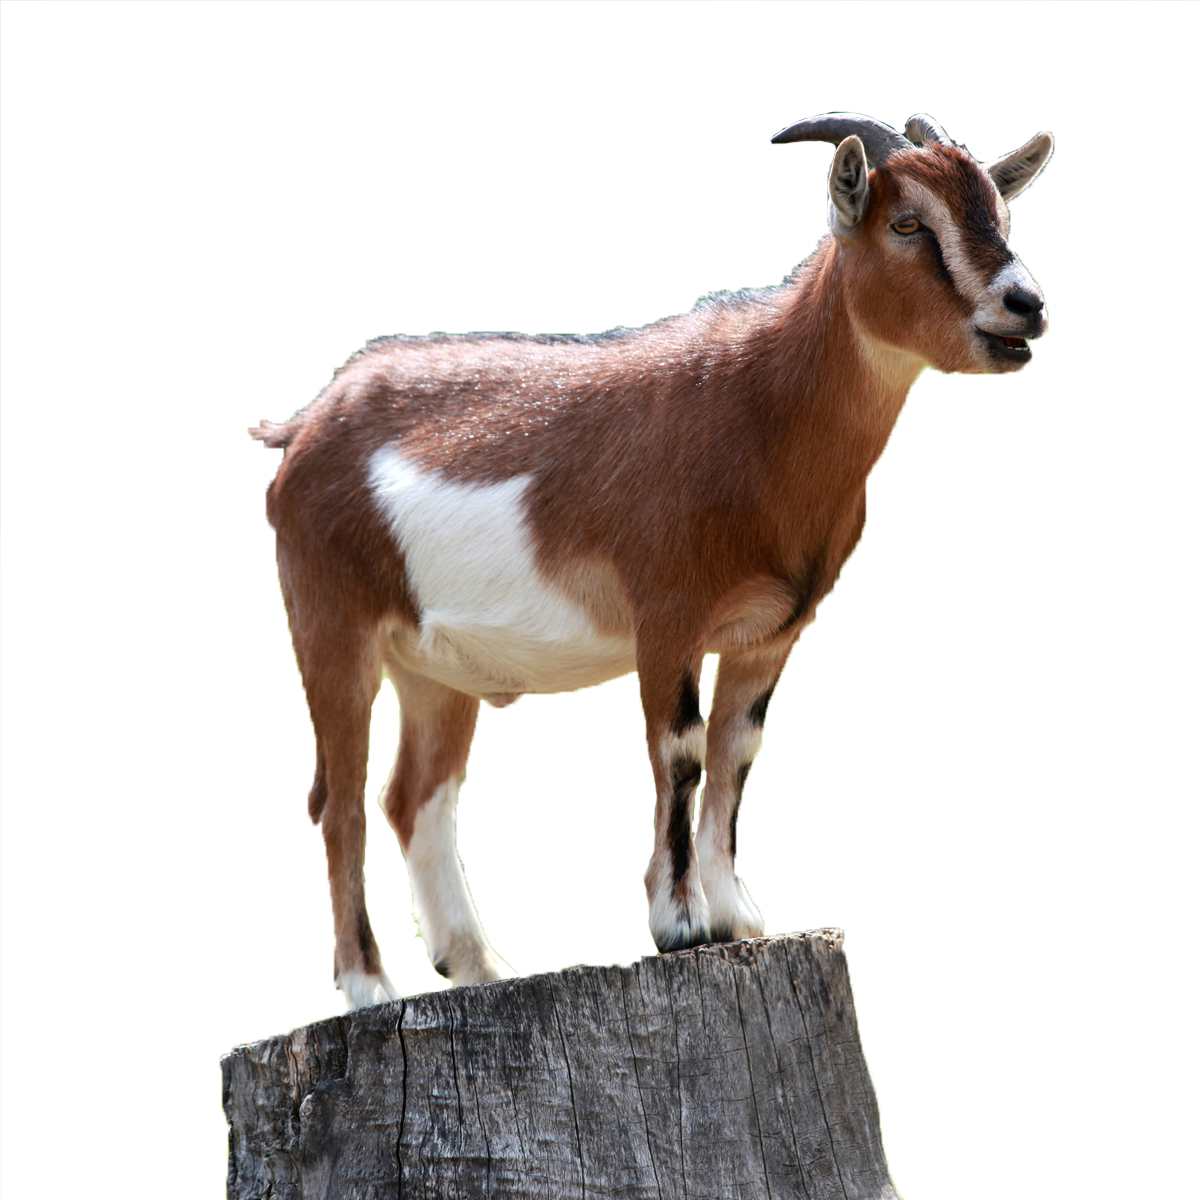 female goat clipart